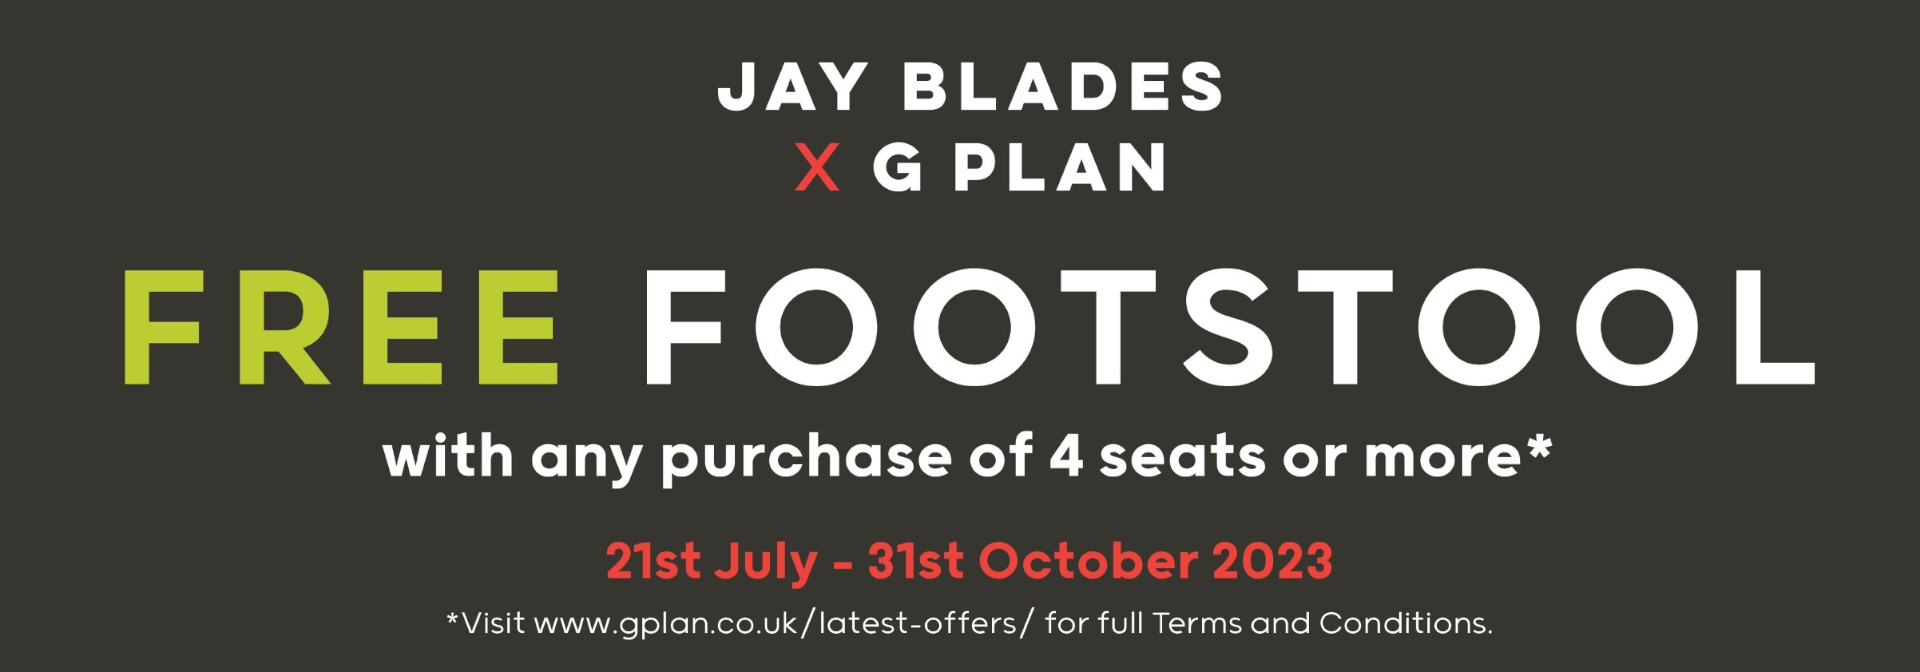 Jay Blades X G Plan Free Footstool